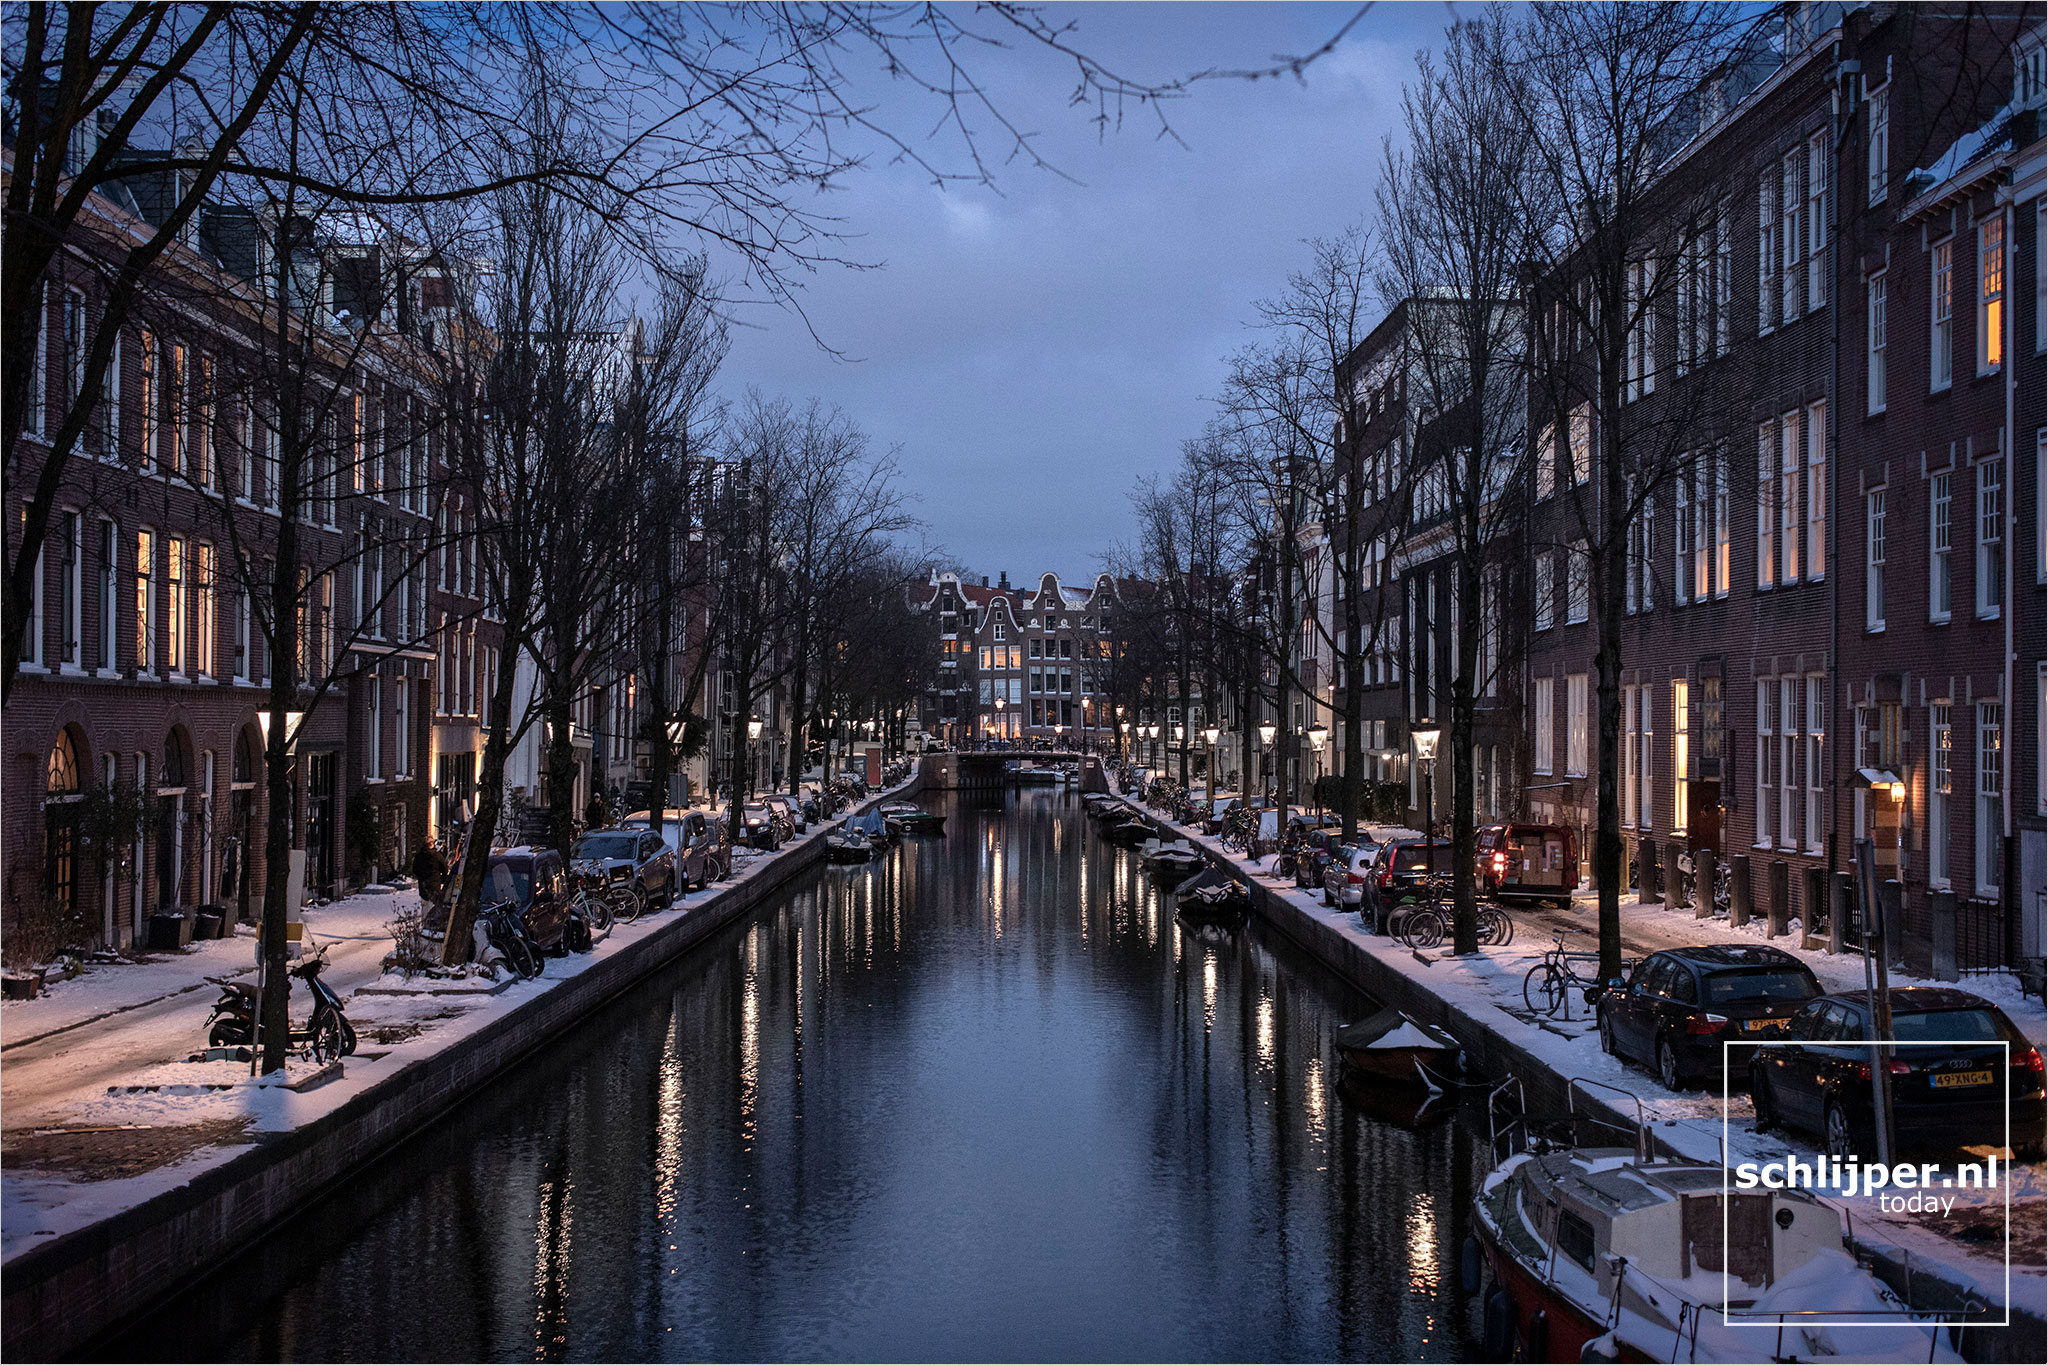 The Netherlands, Amsterdam, 9 februari 2021